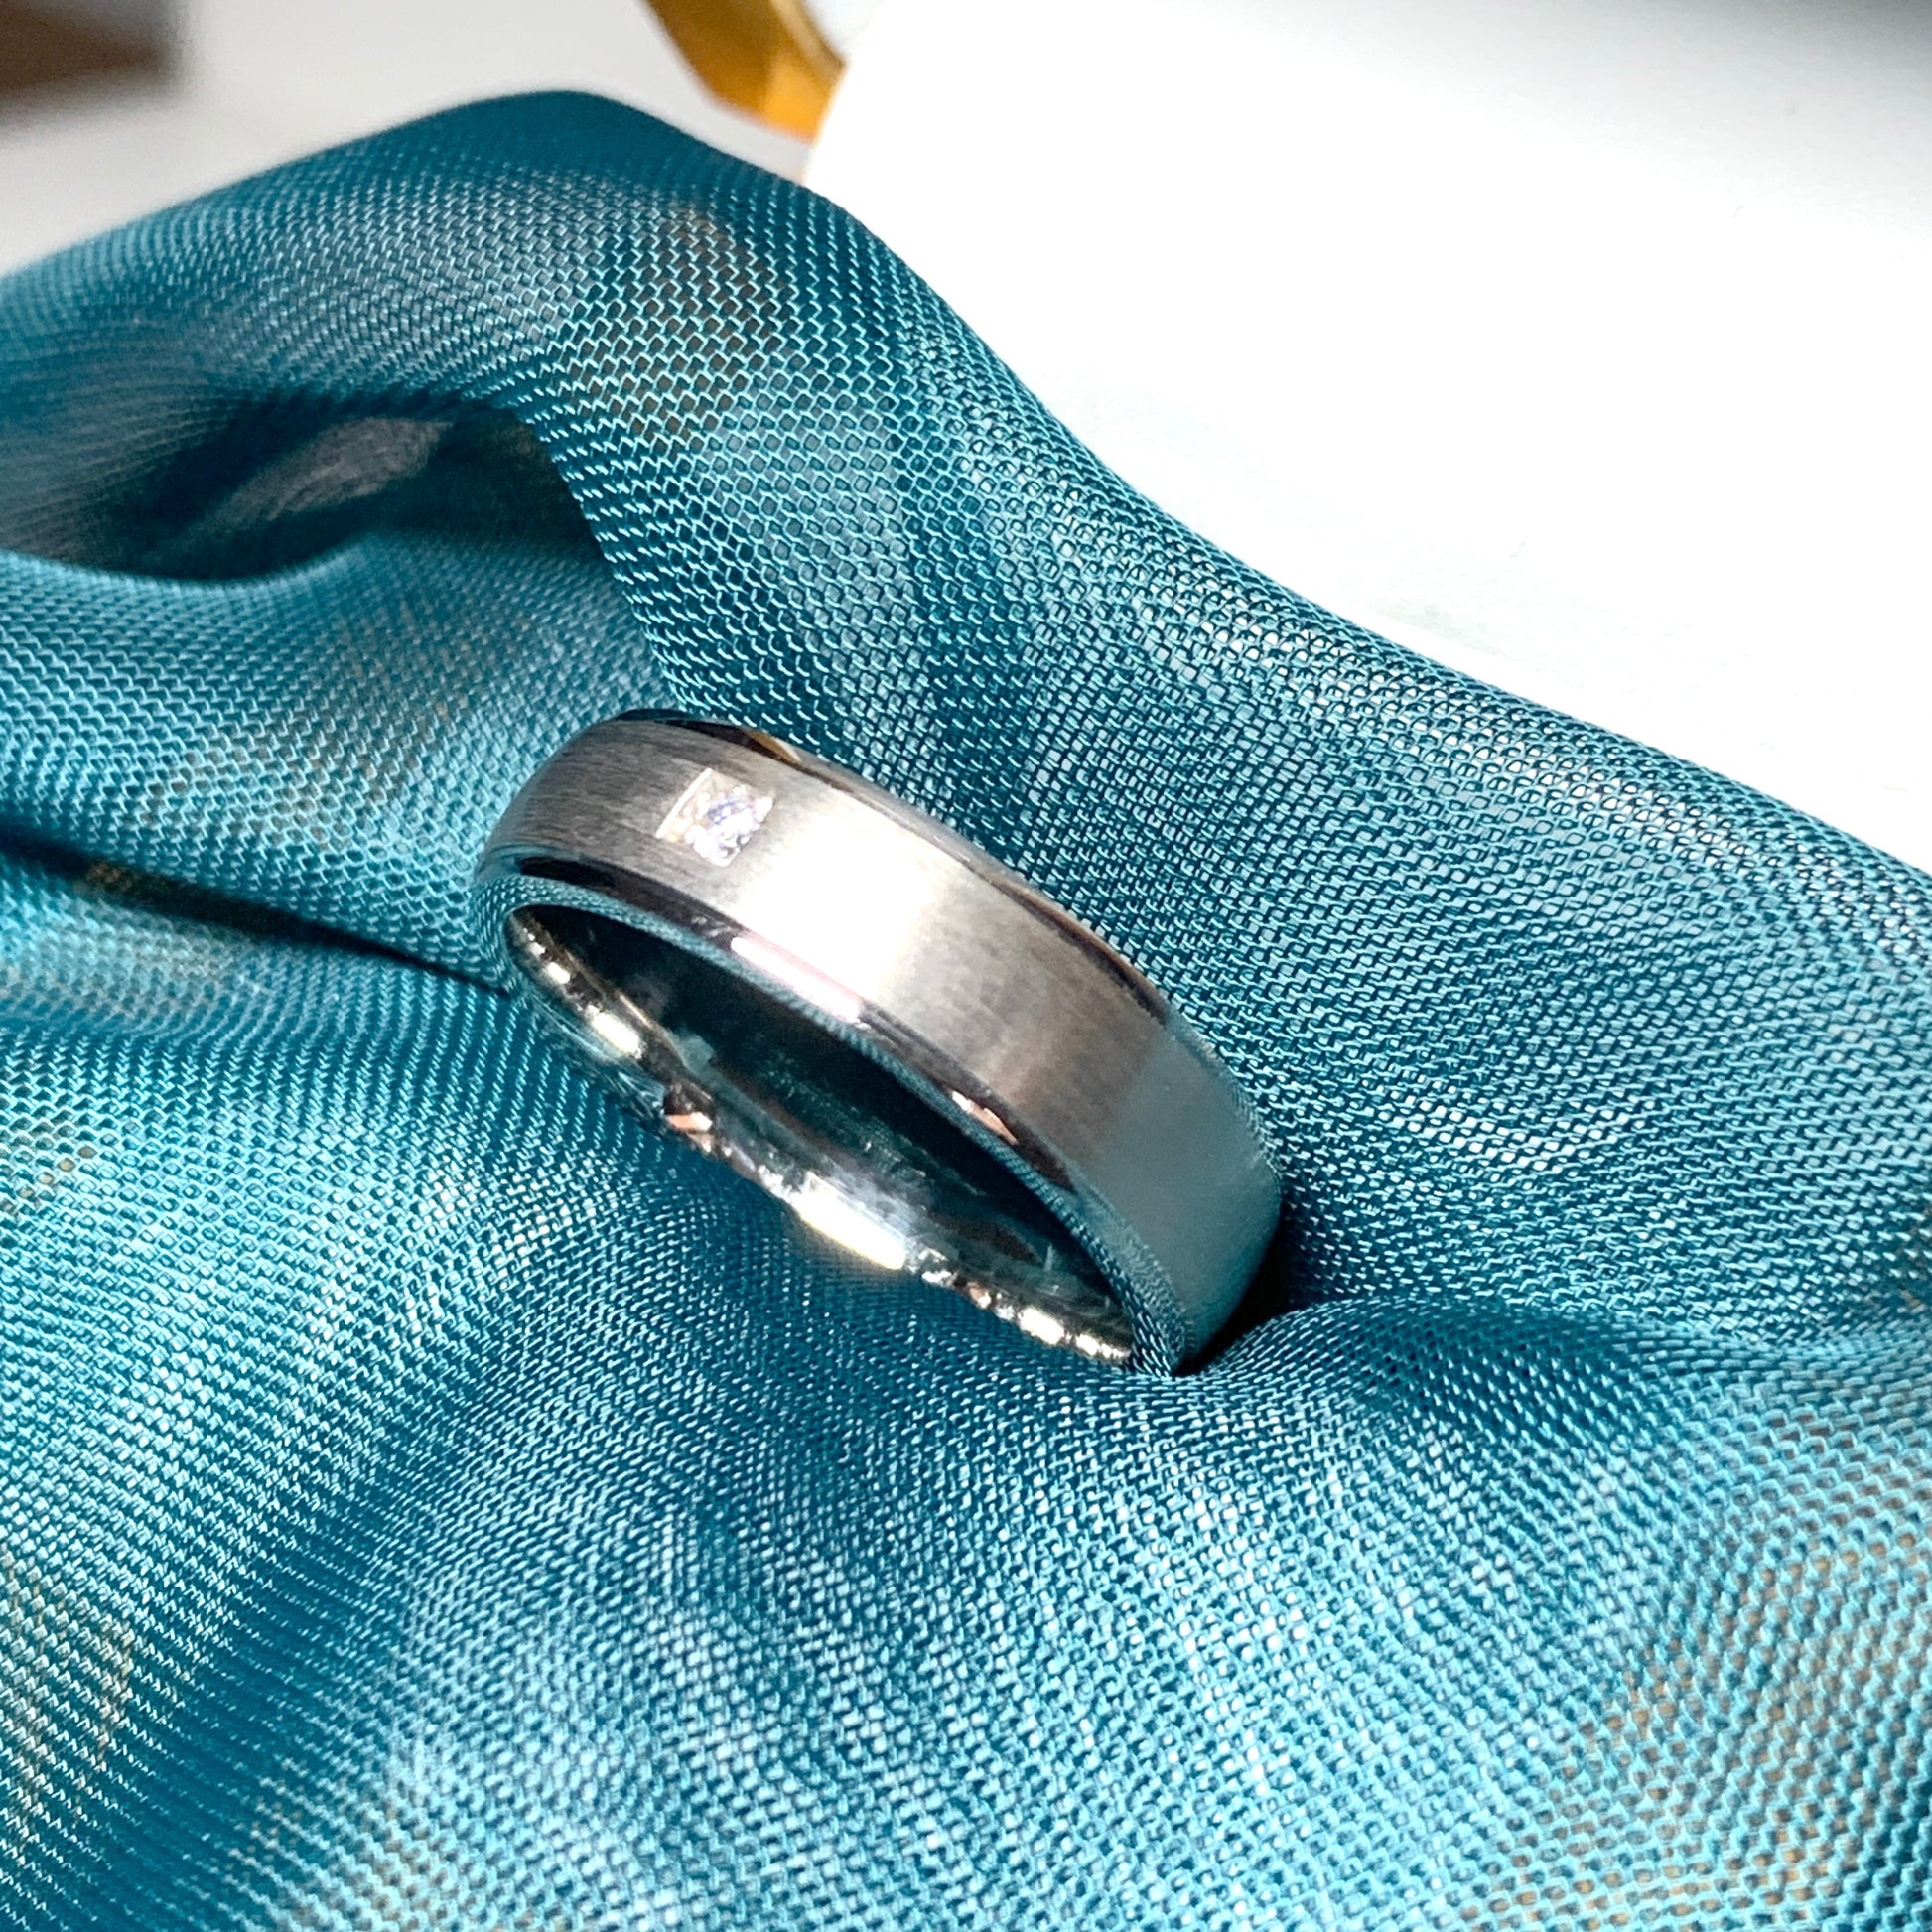 Silver men’s stone set satin finish wedding band ring